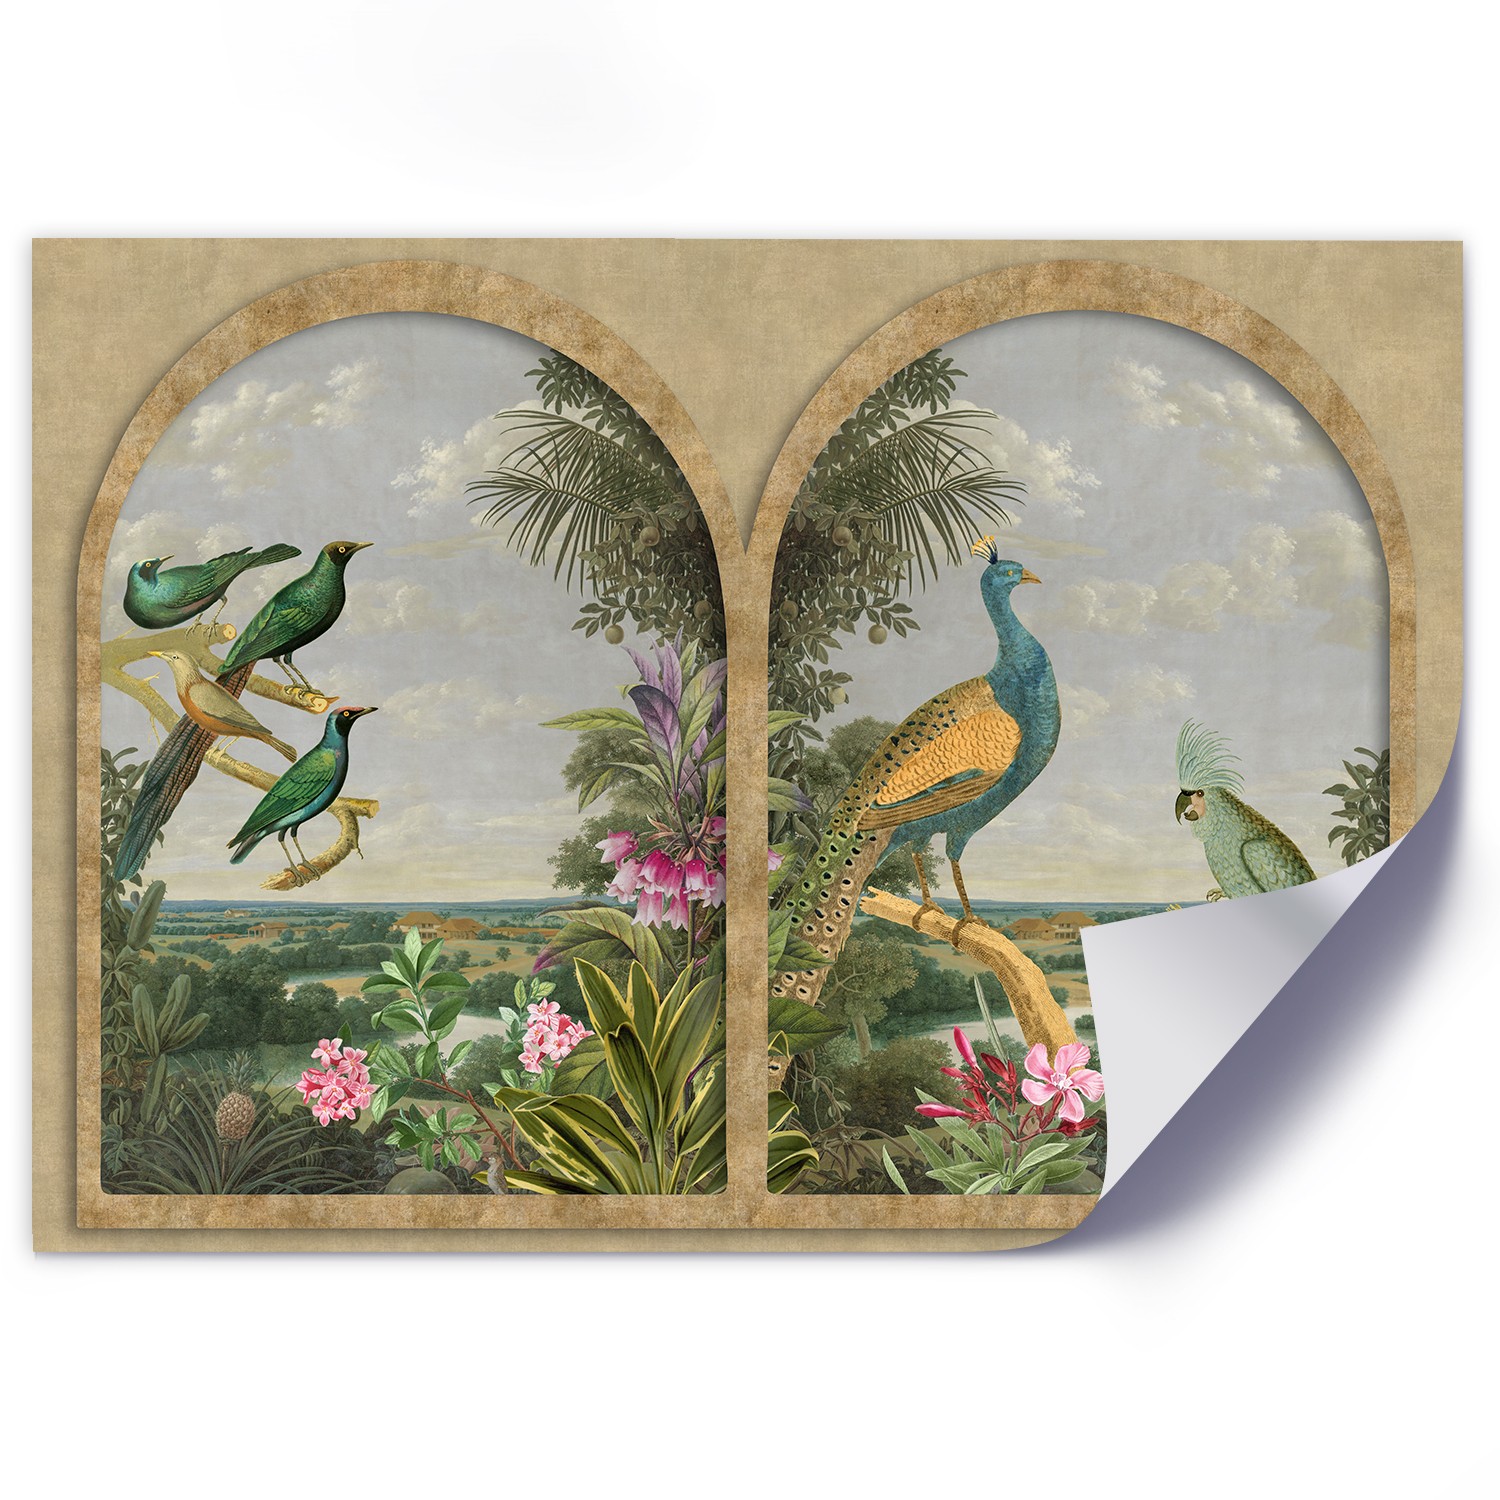 Window with tropical birds